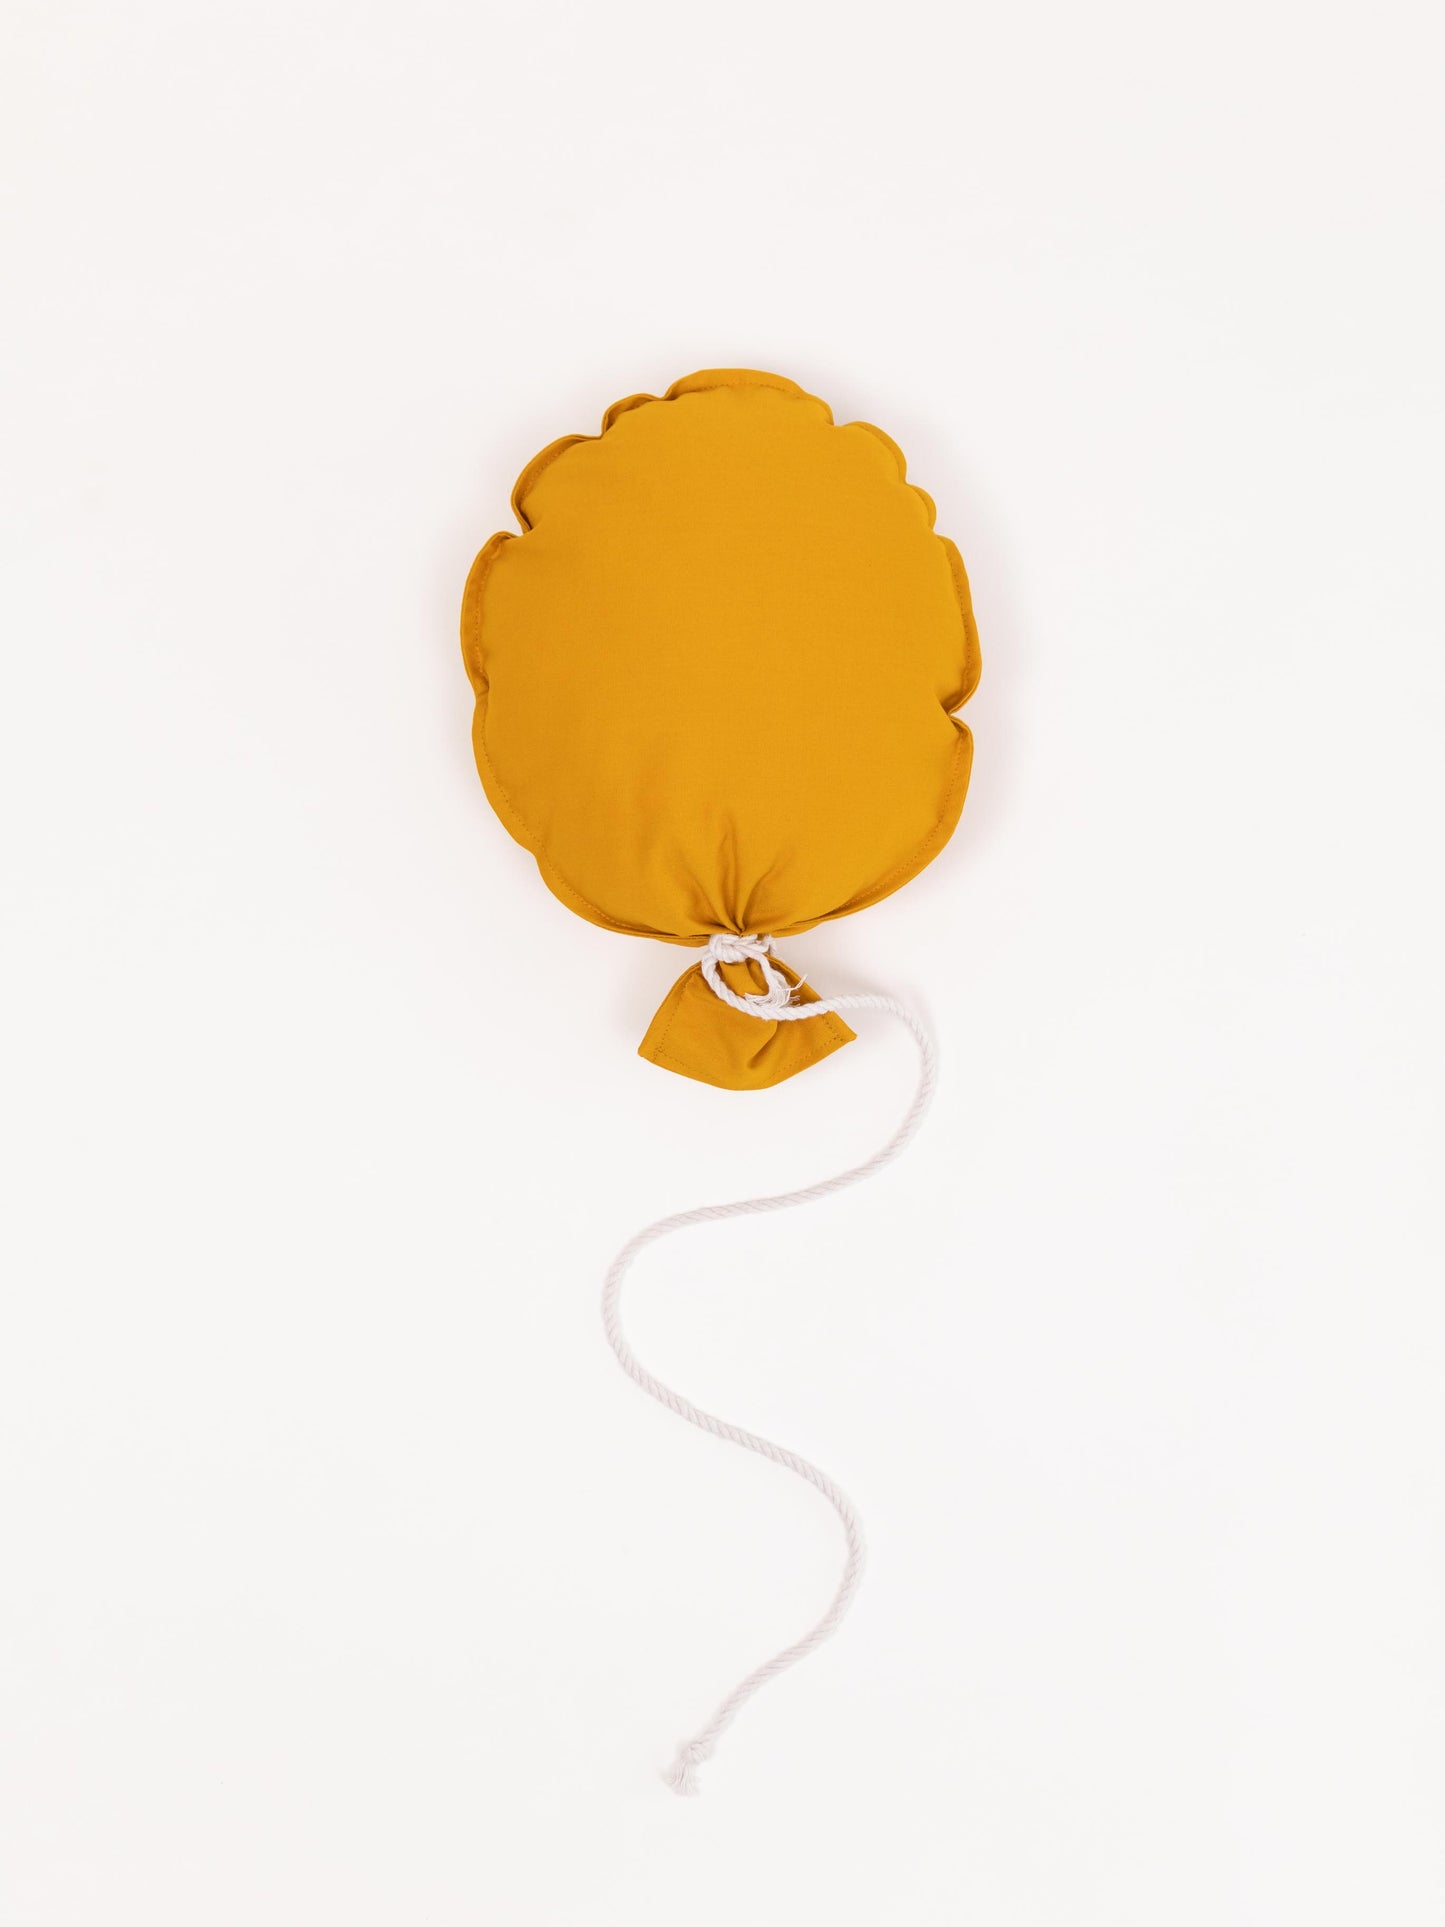 Kinderzimmer Wanddeko 'Stoff-Luftballon' Curry handmade